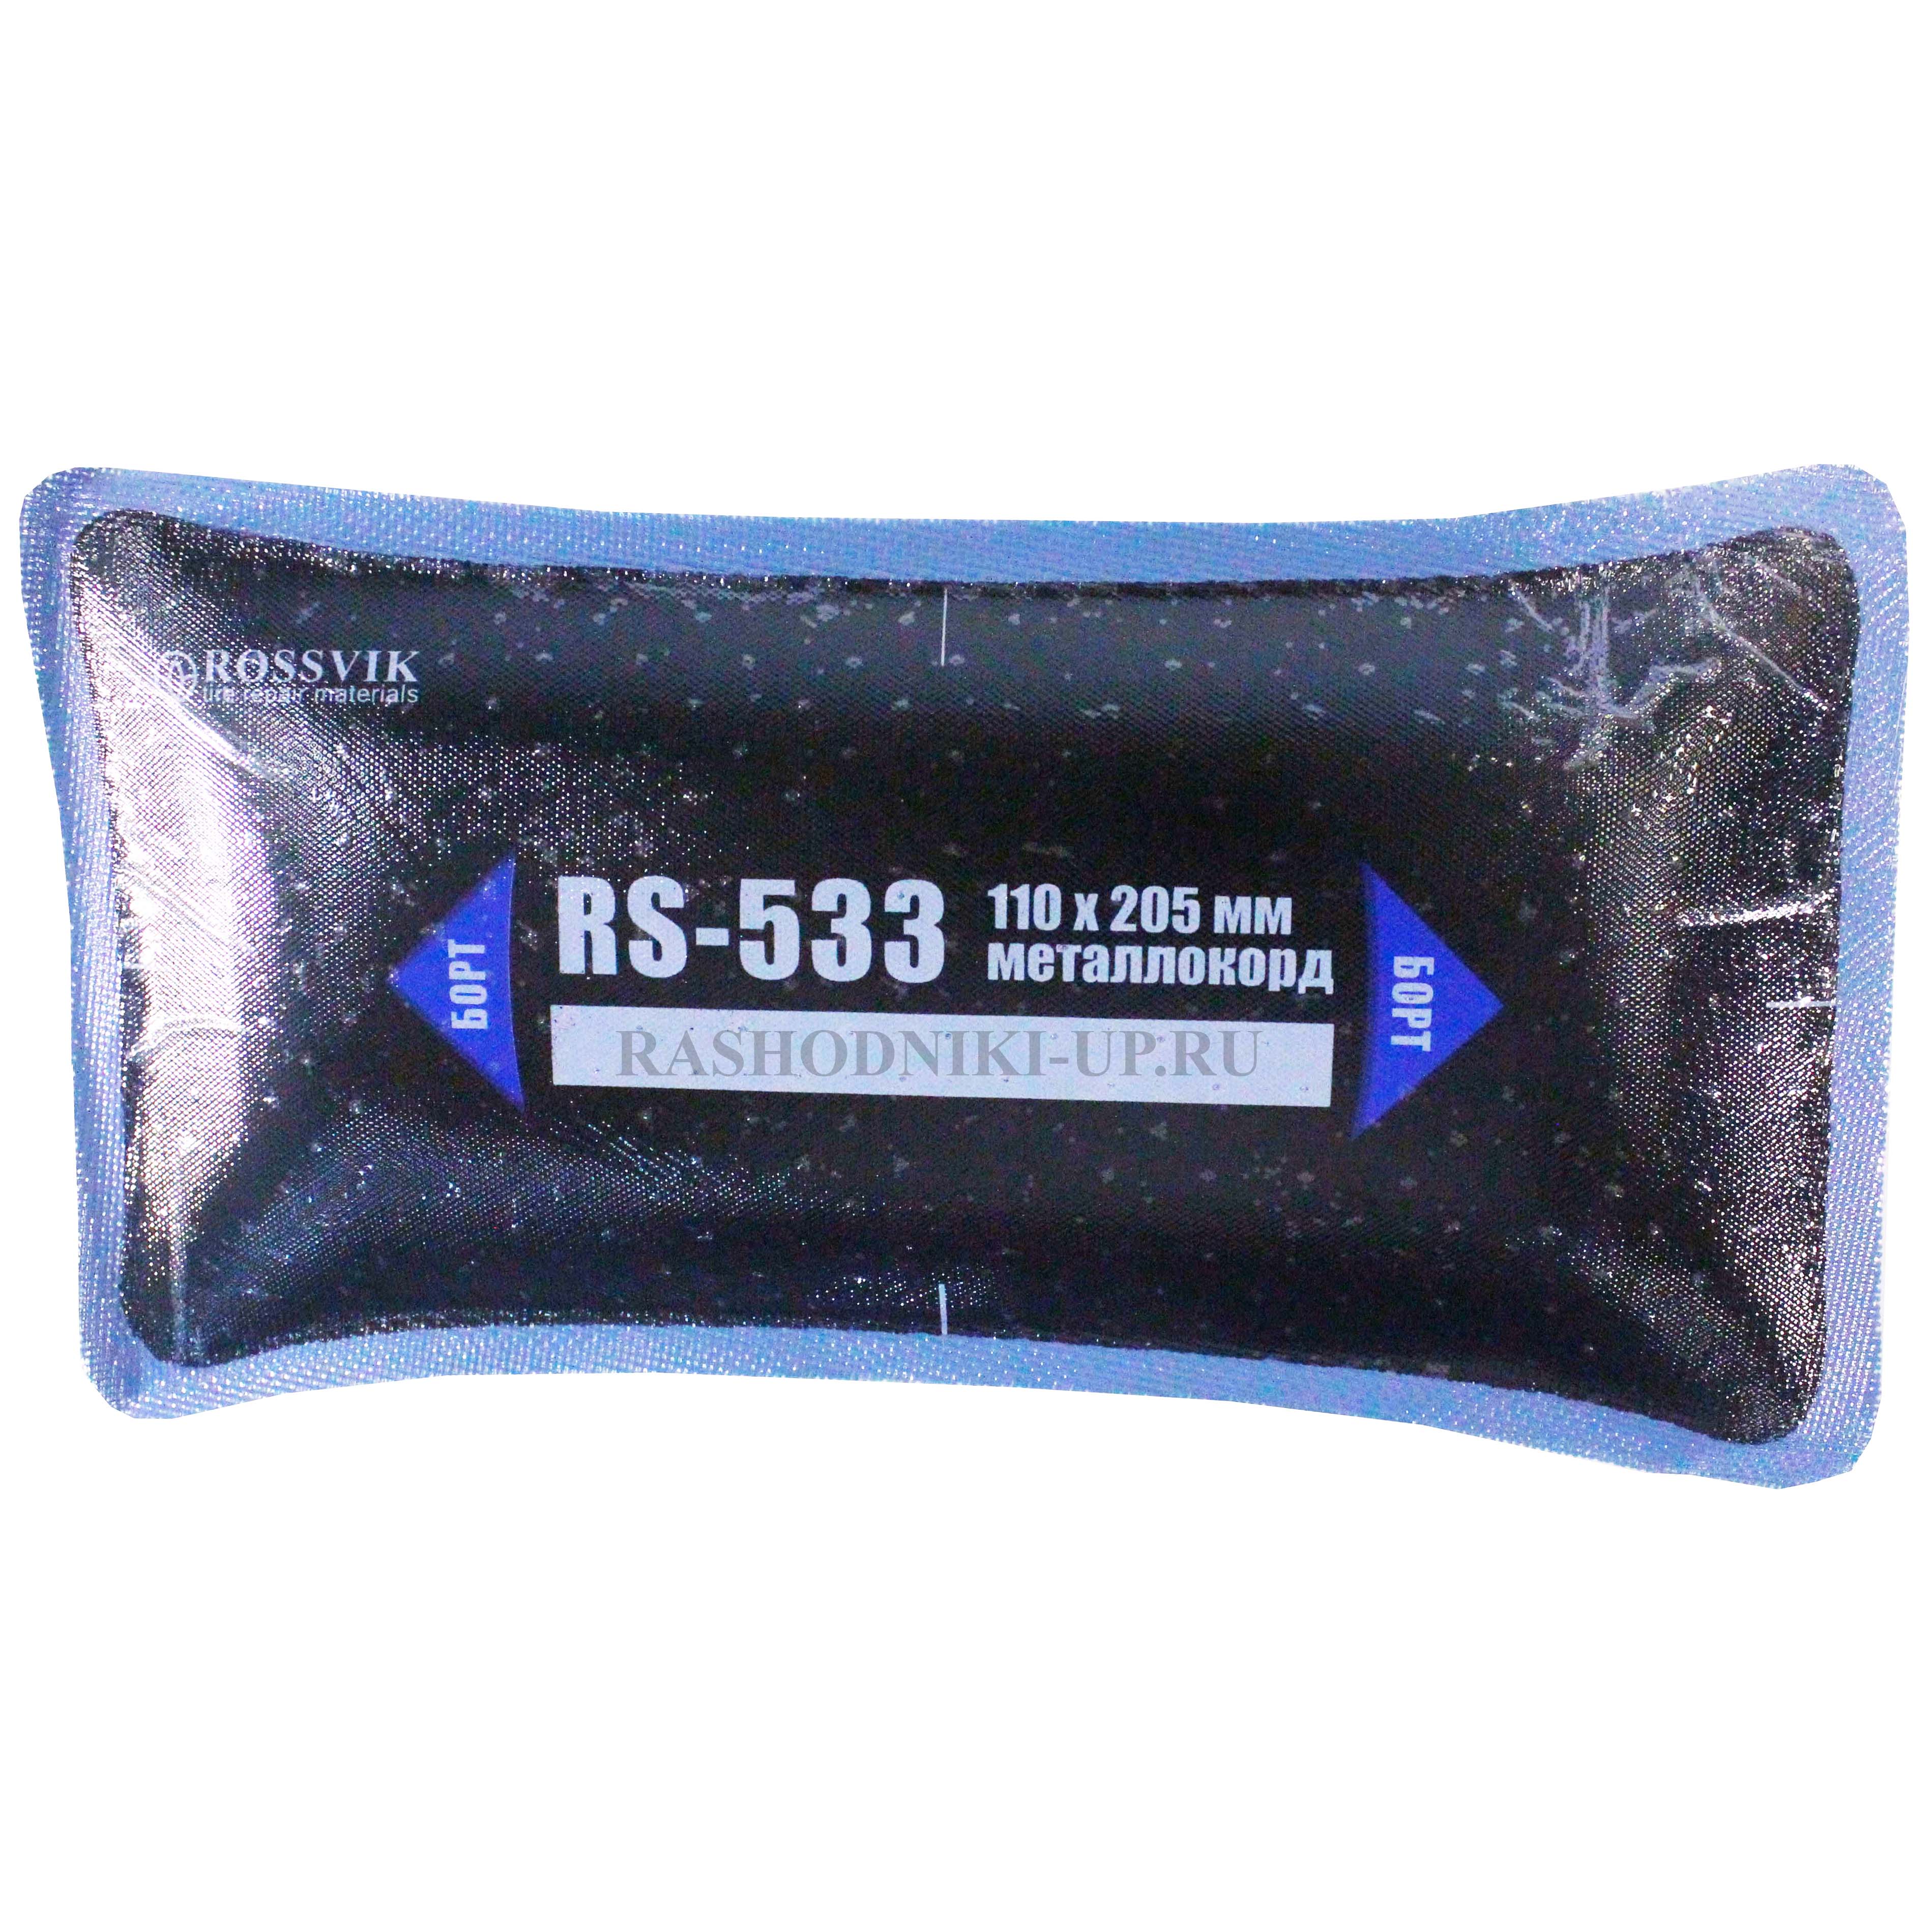 Пластырь RS-533 (110-205мм) 1шт